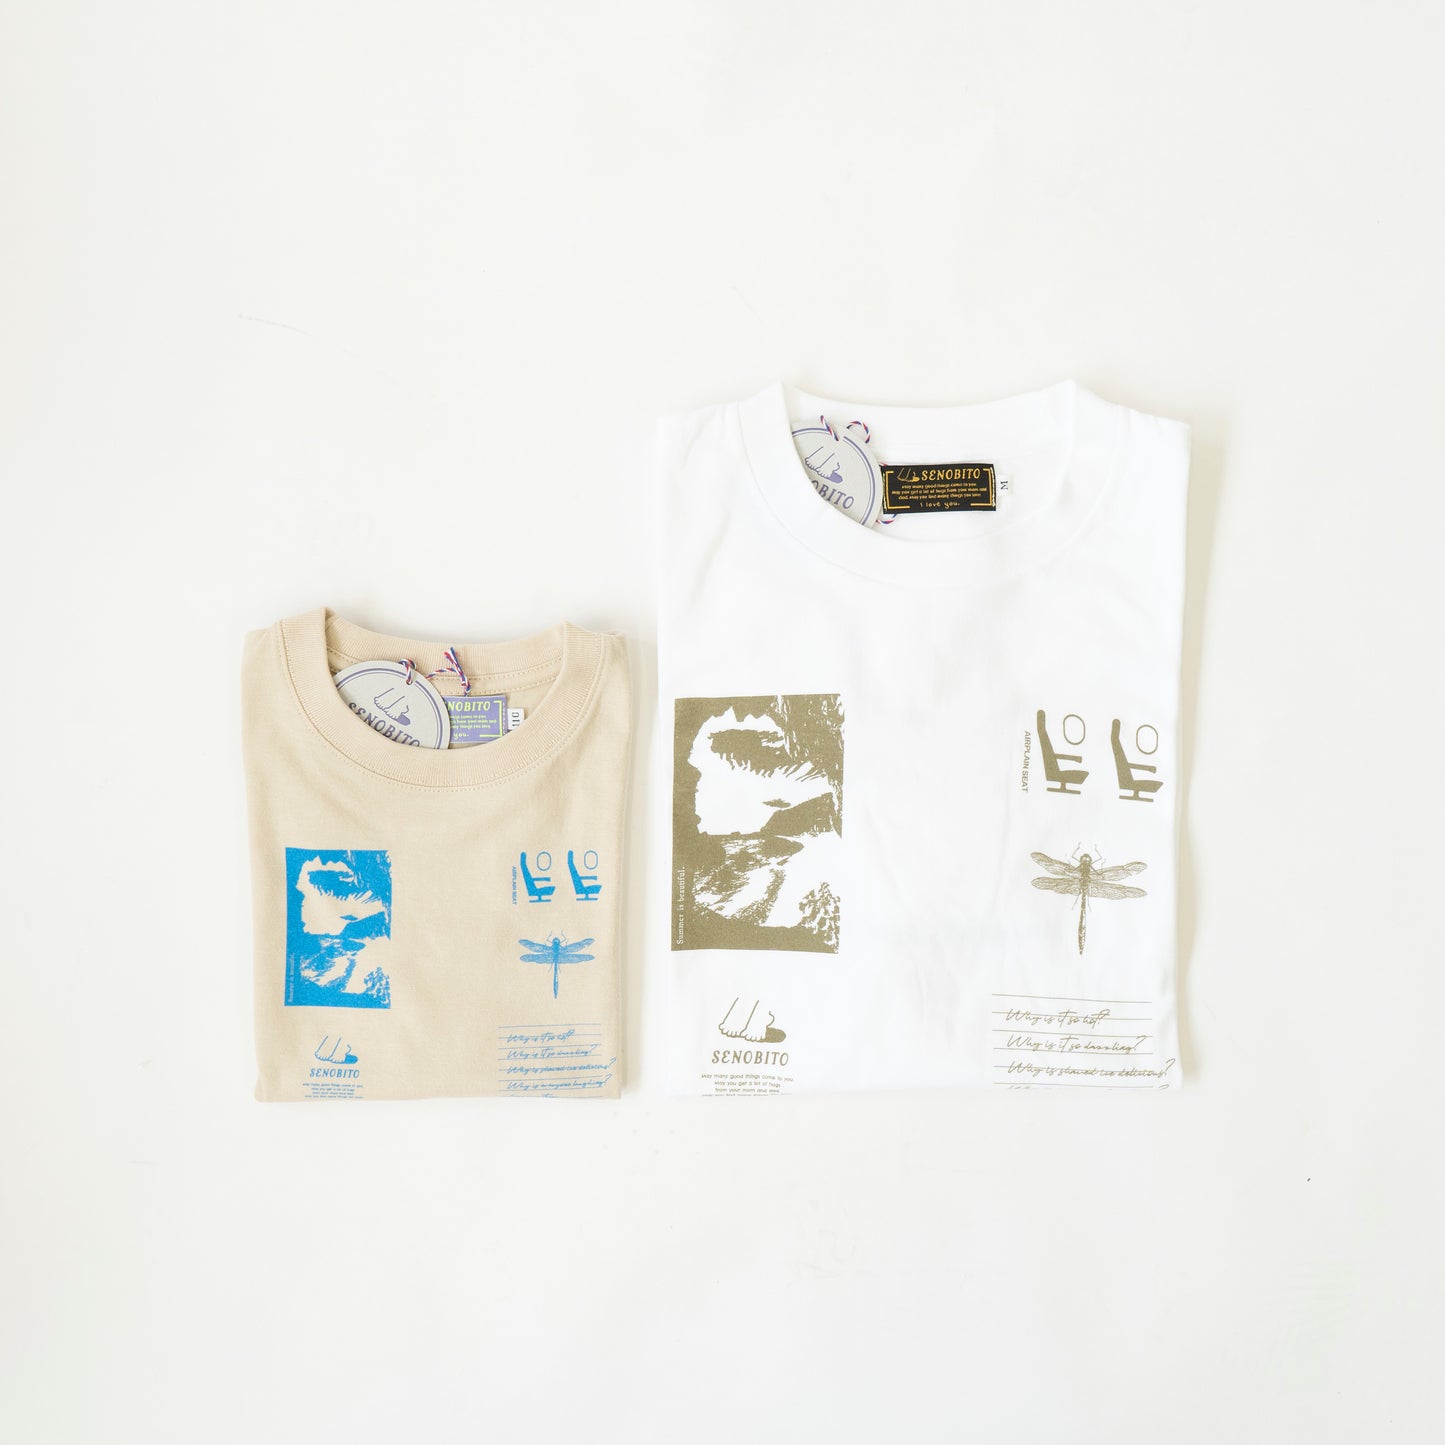 [ Tシャツ3枚組セール対象商品 ] Summer is beautiful T-shirt（夏の思い出Tシャツ）